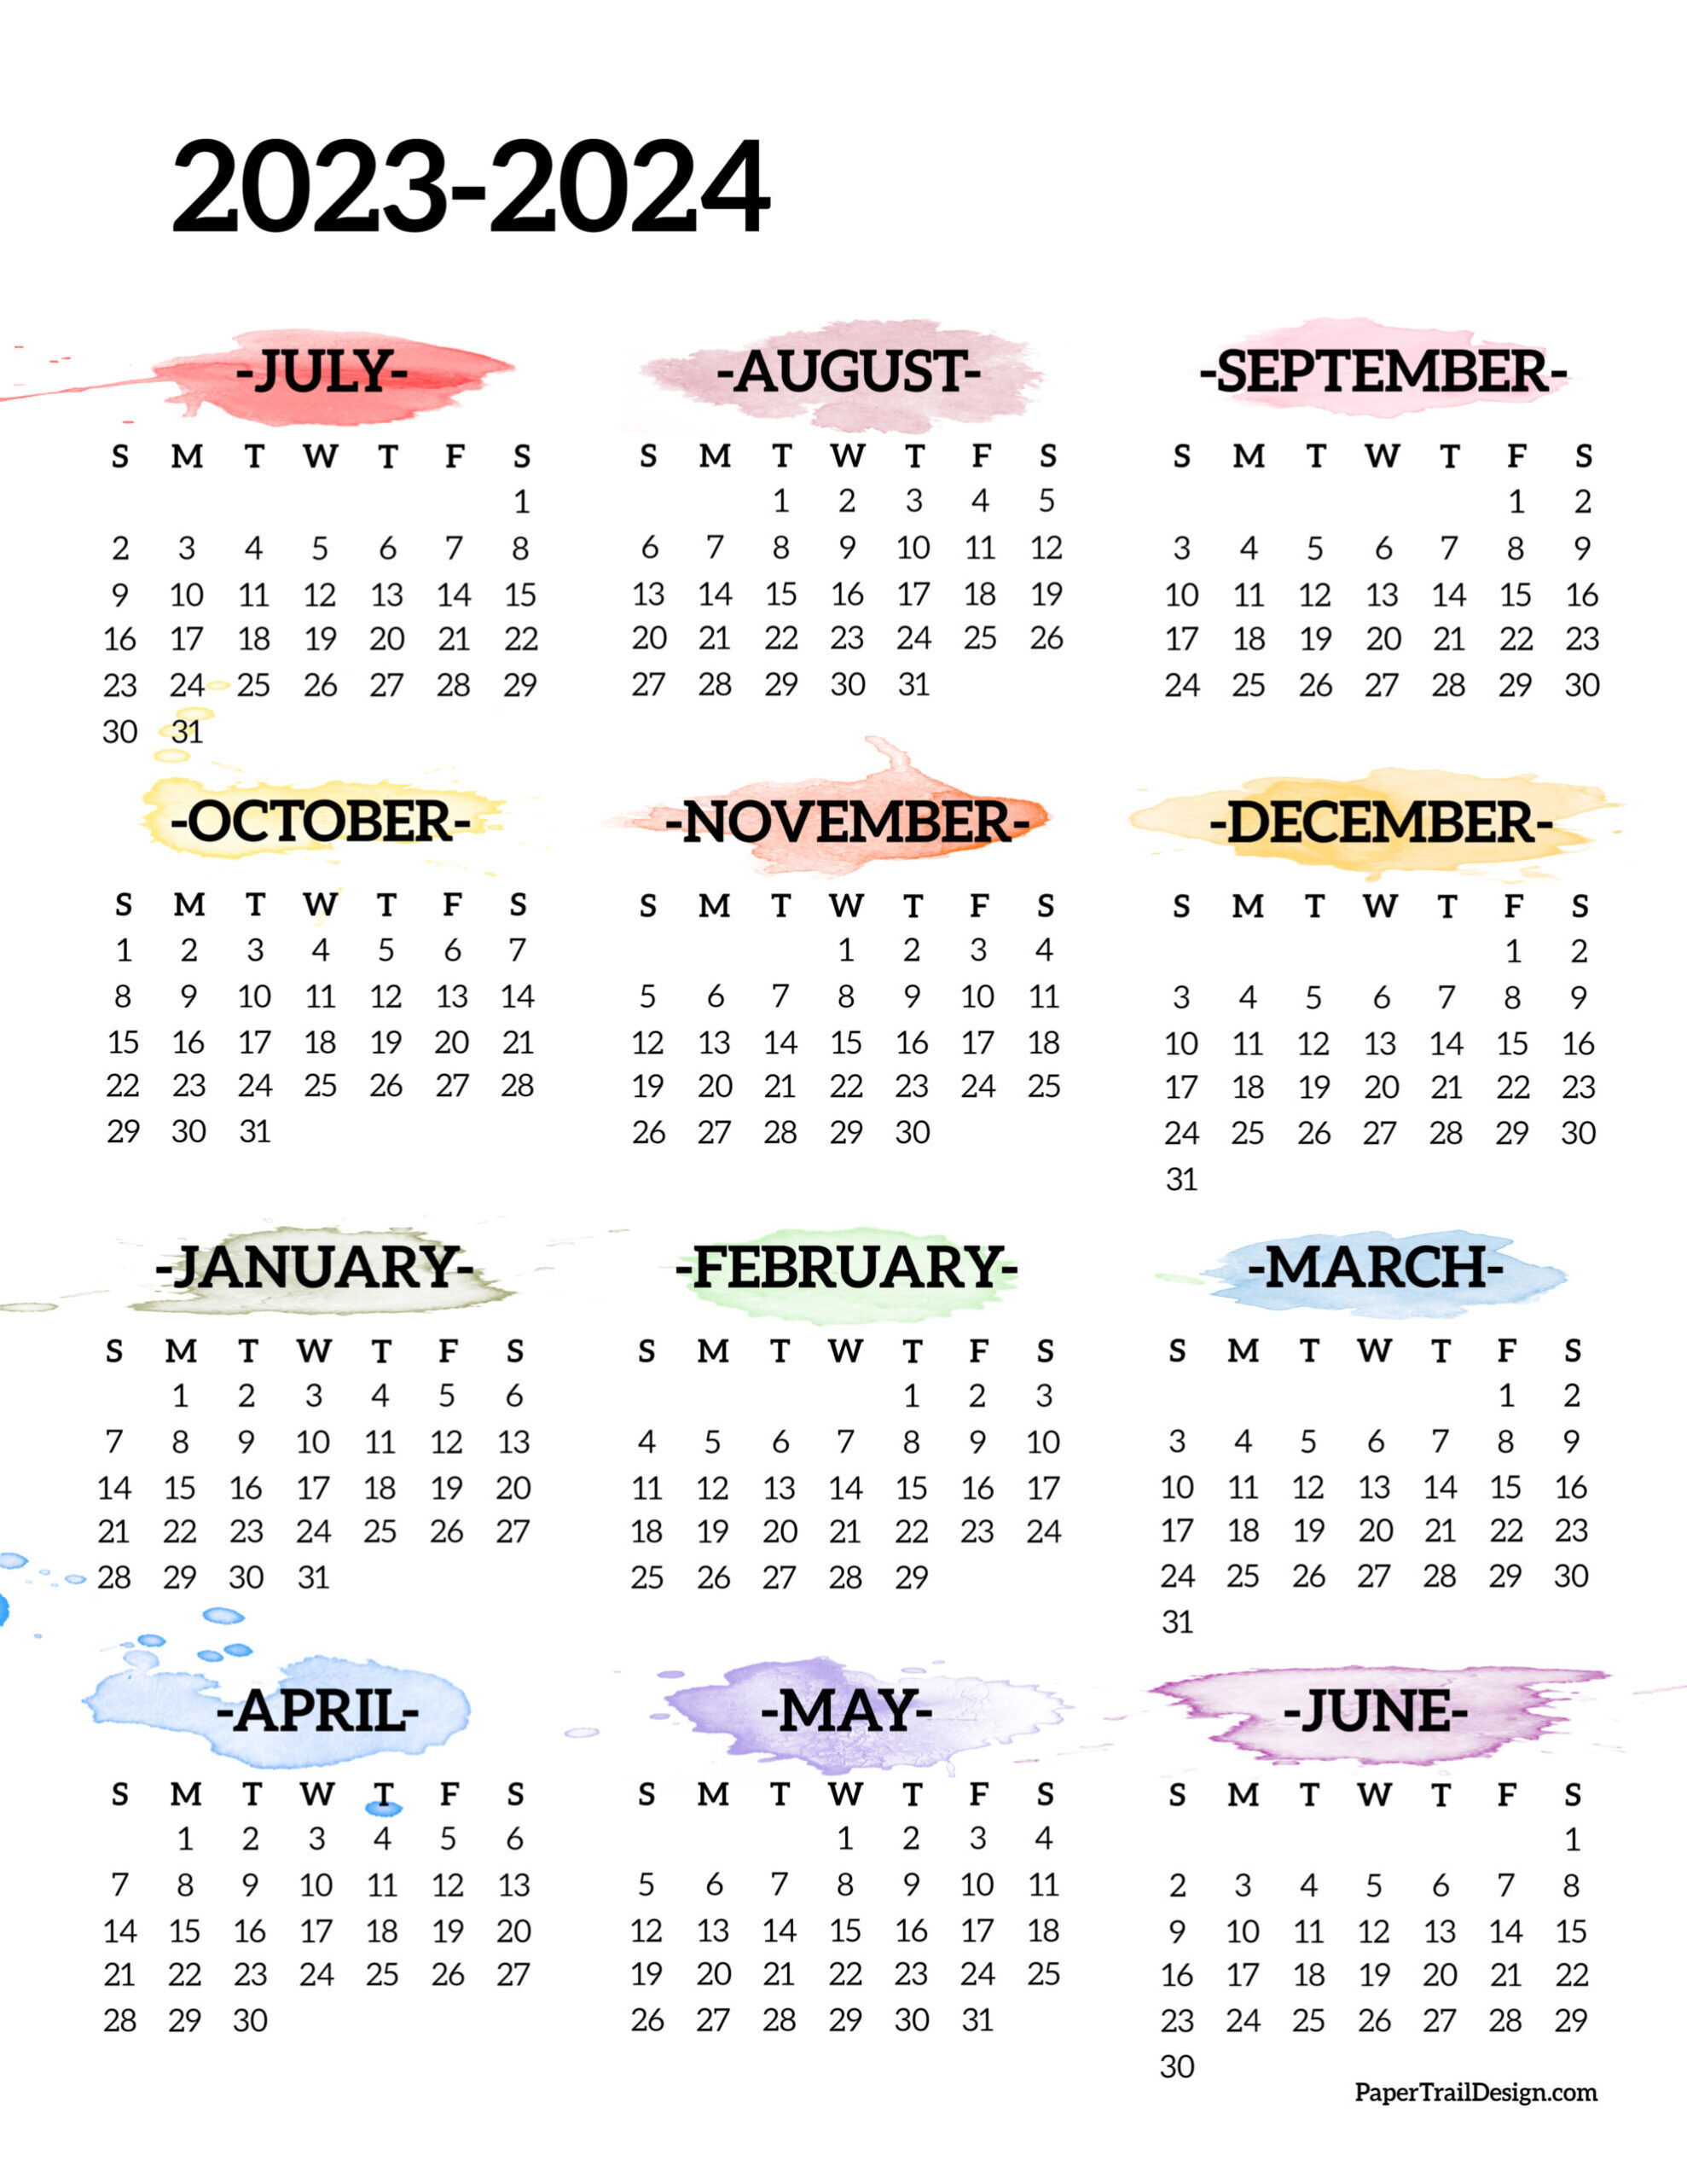 2023-2024 School Year Calendar Free Printable - Paper Trail Design for August 2023 - June 2024 Calendar Printable